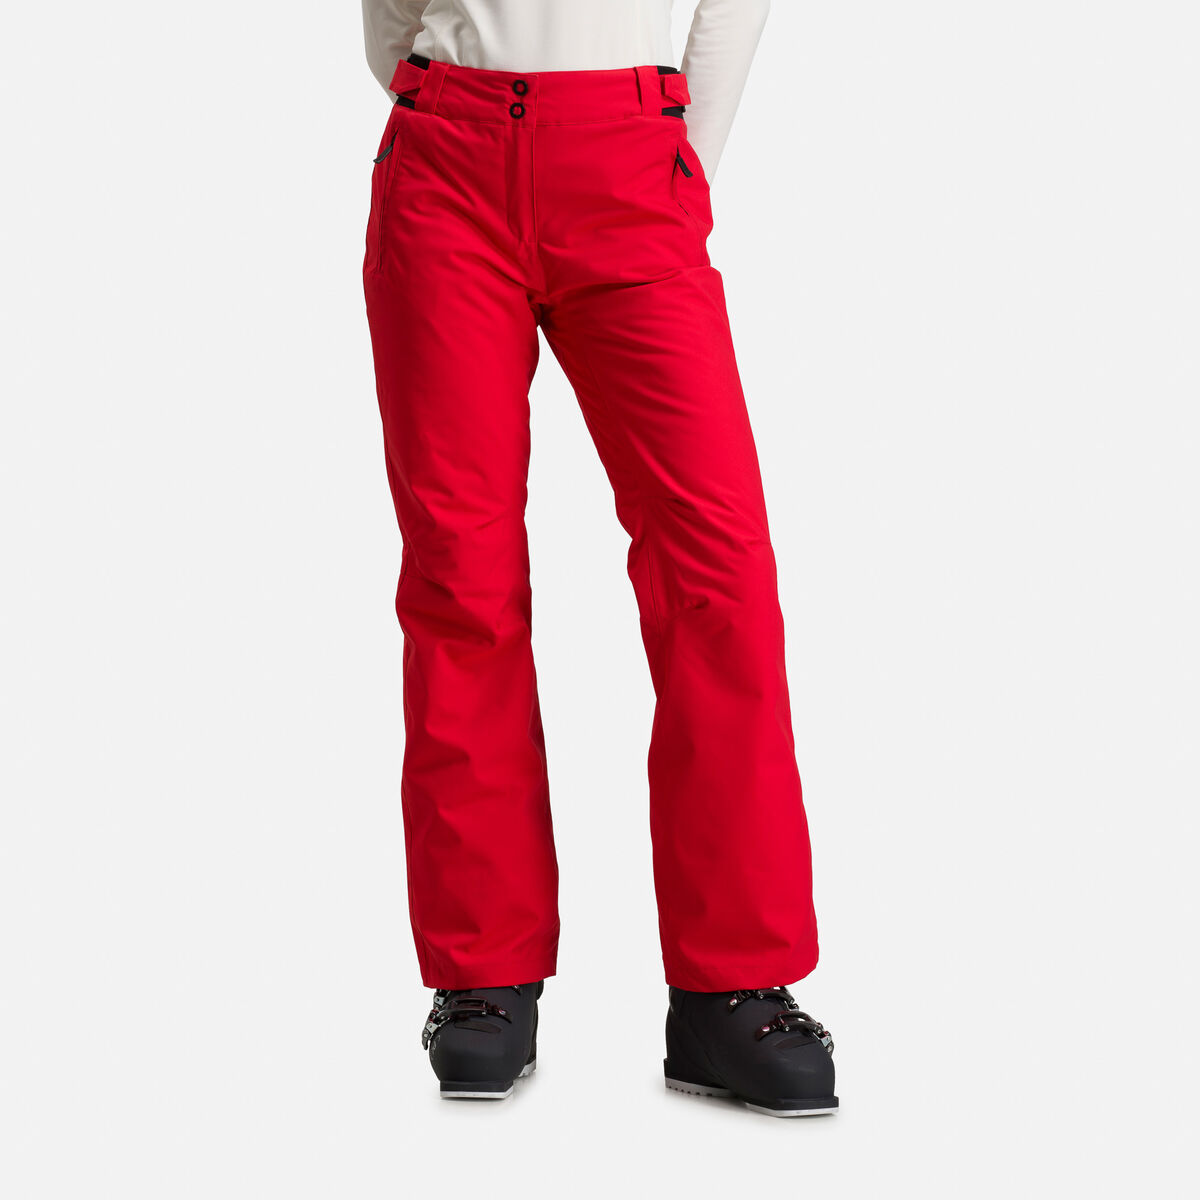 Rossignol Women's Ski Pants Red